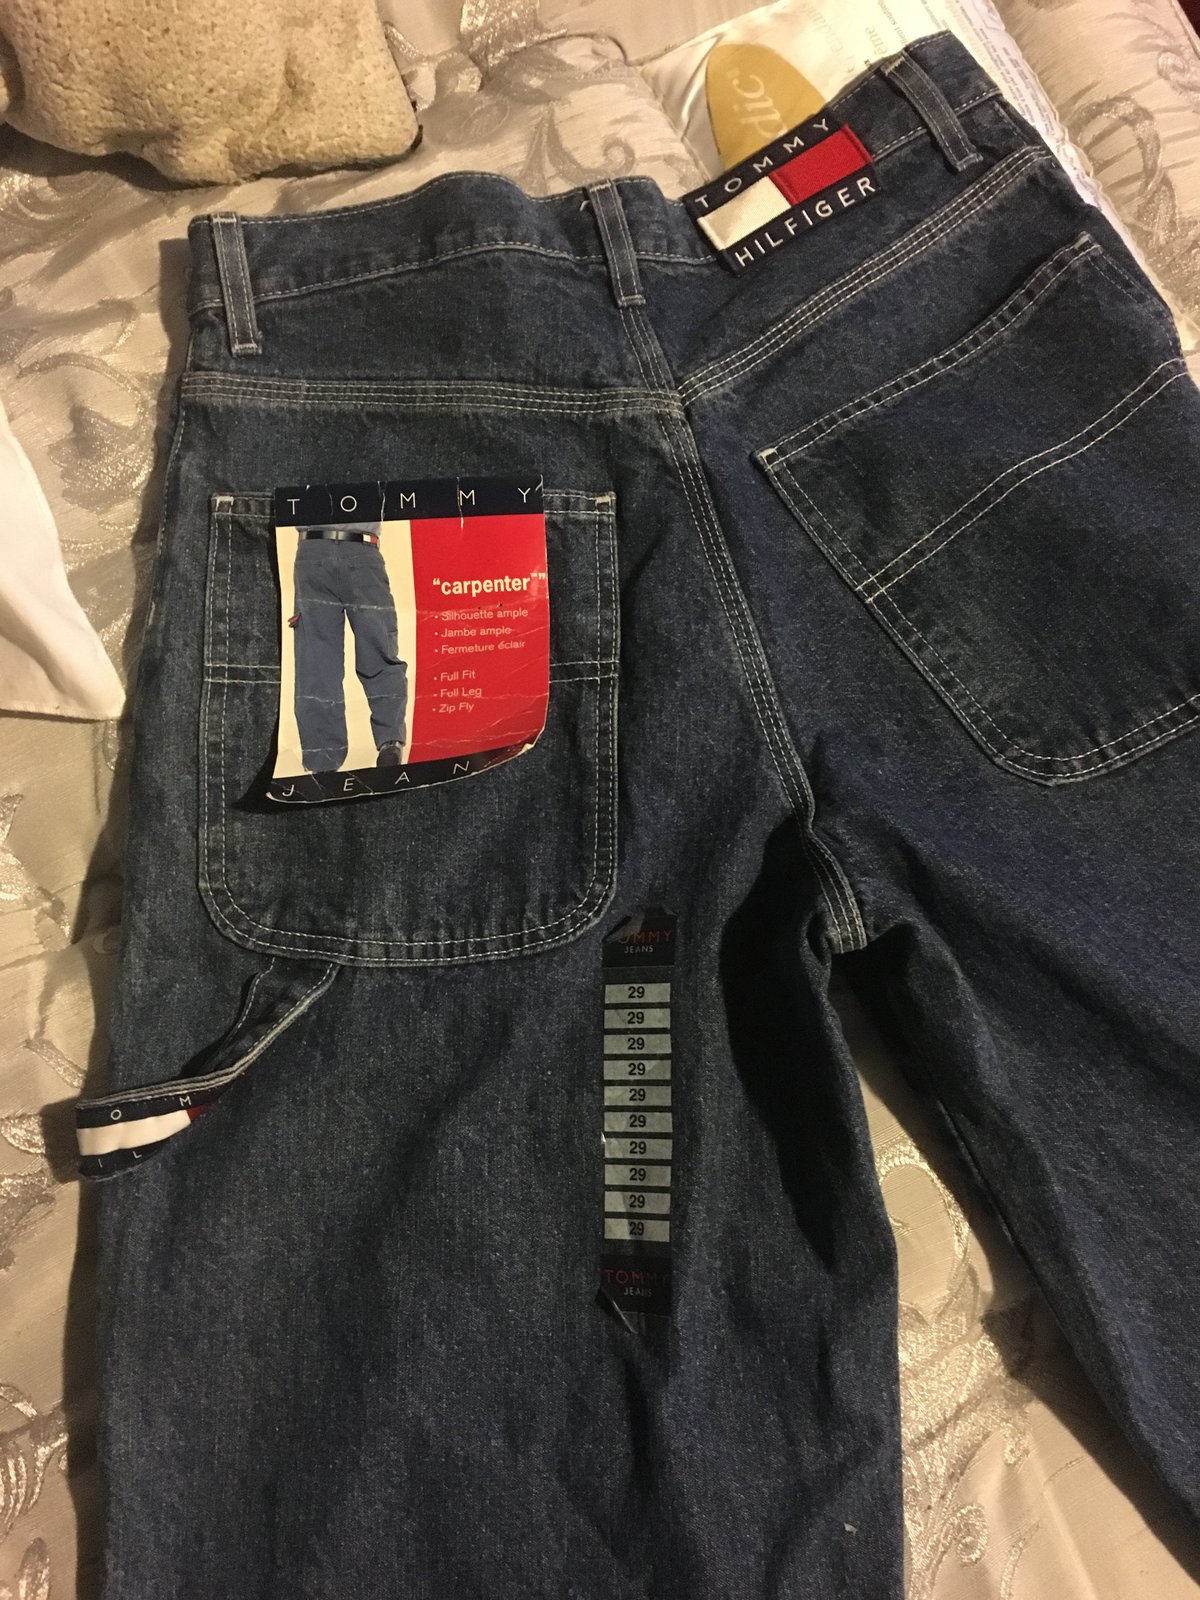 hilfiger jeans sale